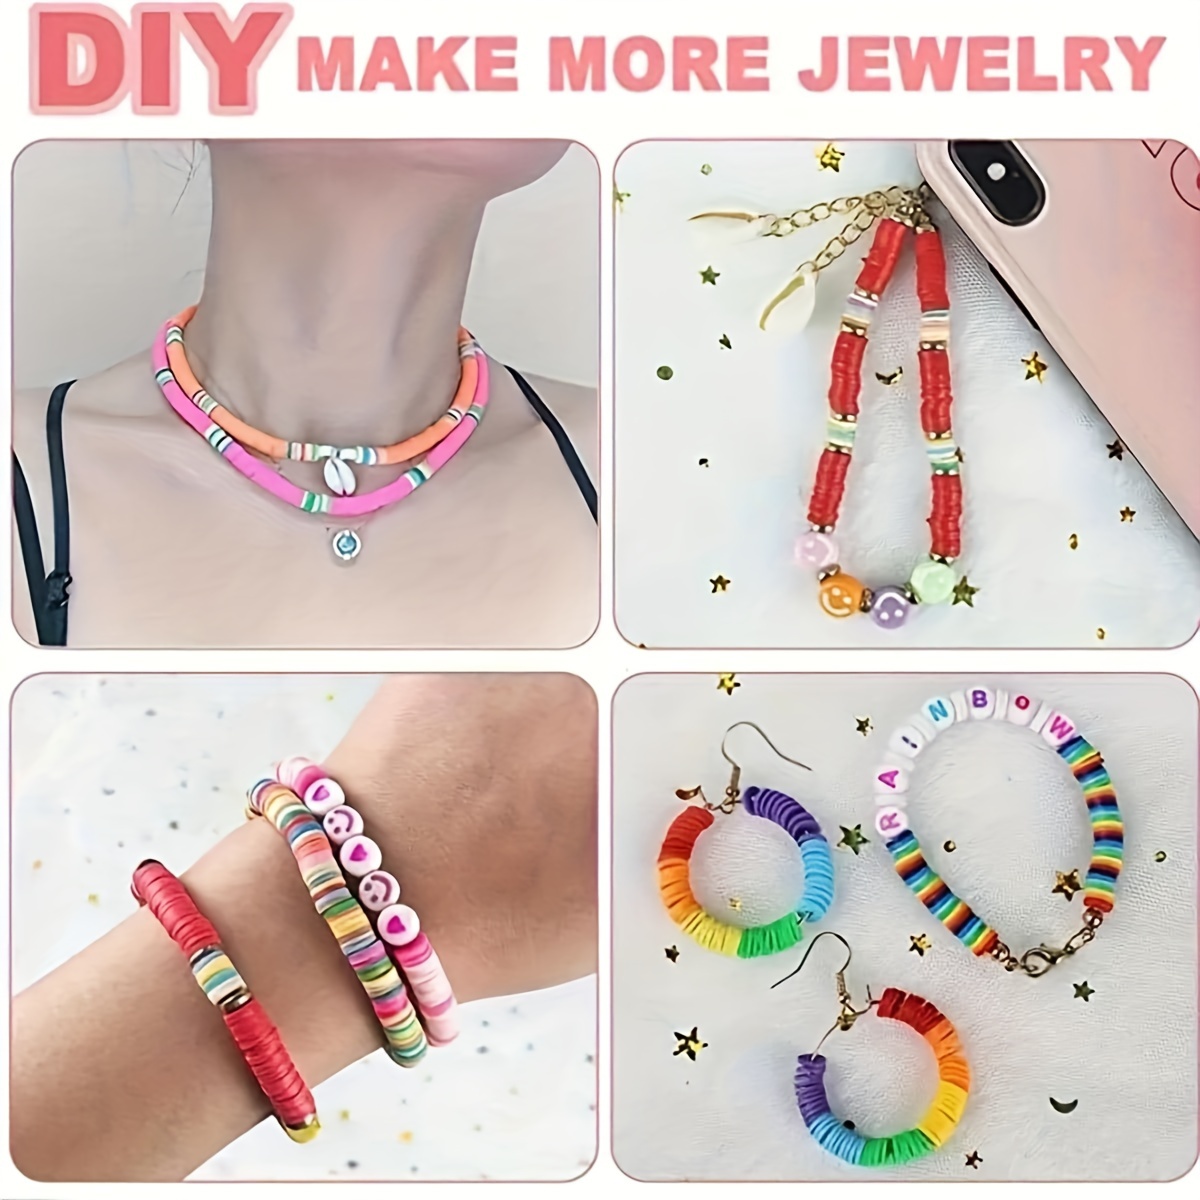  Clay Beads Bracelet Making Kit for Girls, DIY